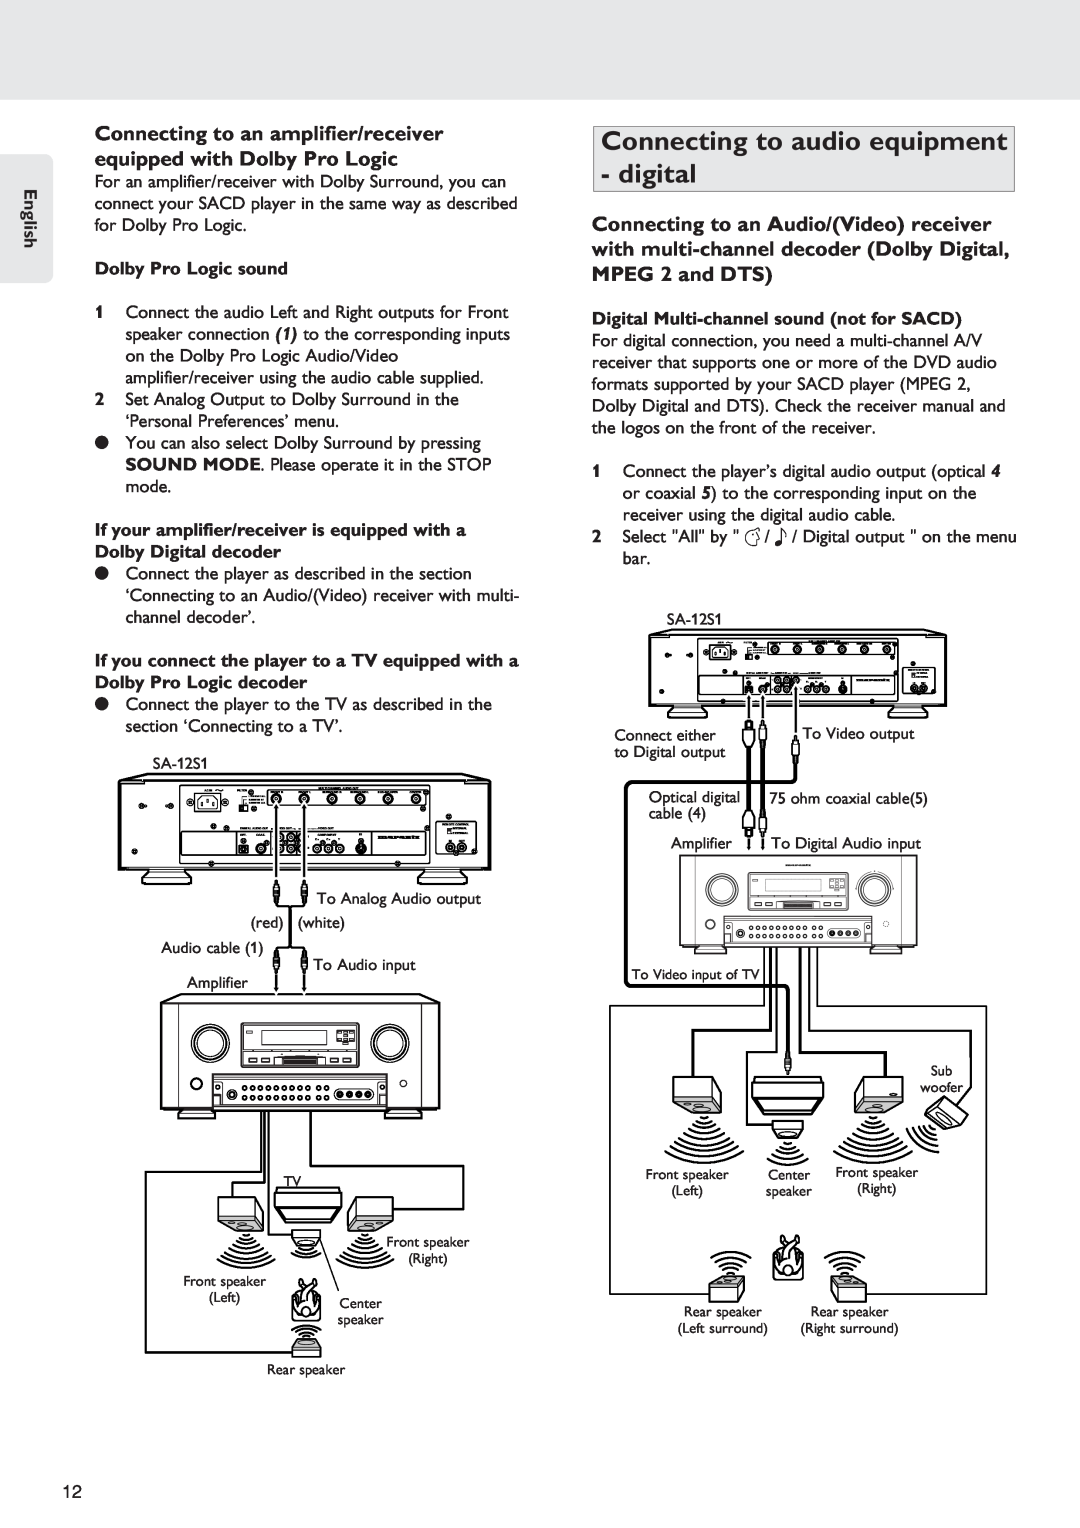 Marantz SA-12S1 manual Connecting to audio equipment - digital, English, Dolby Pro Logic sound 